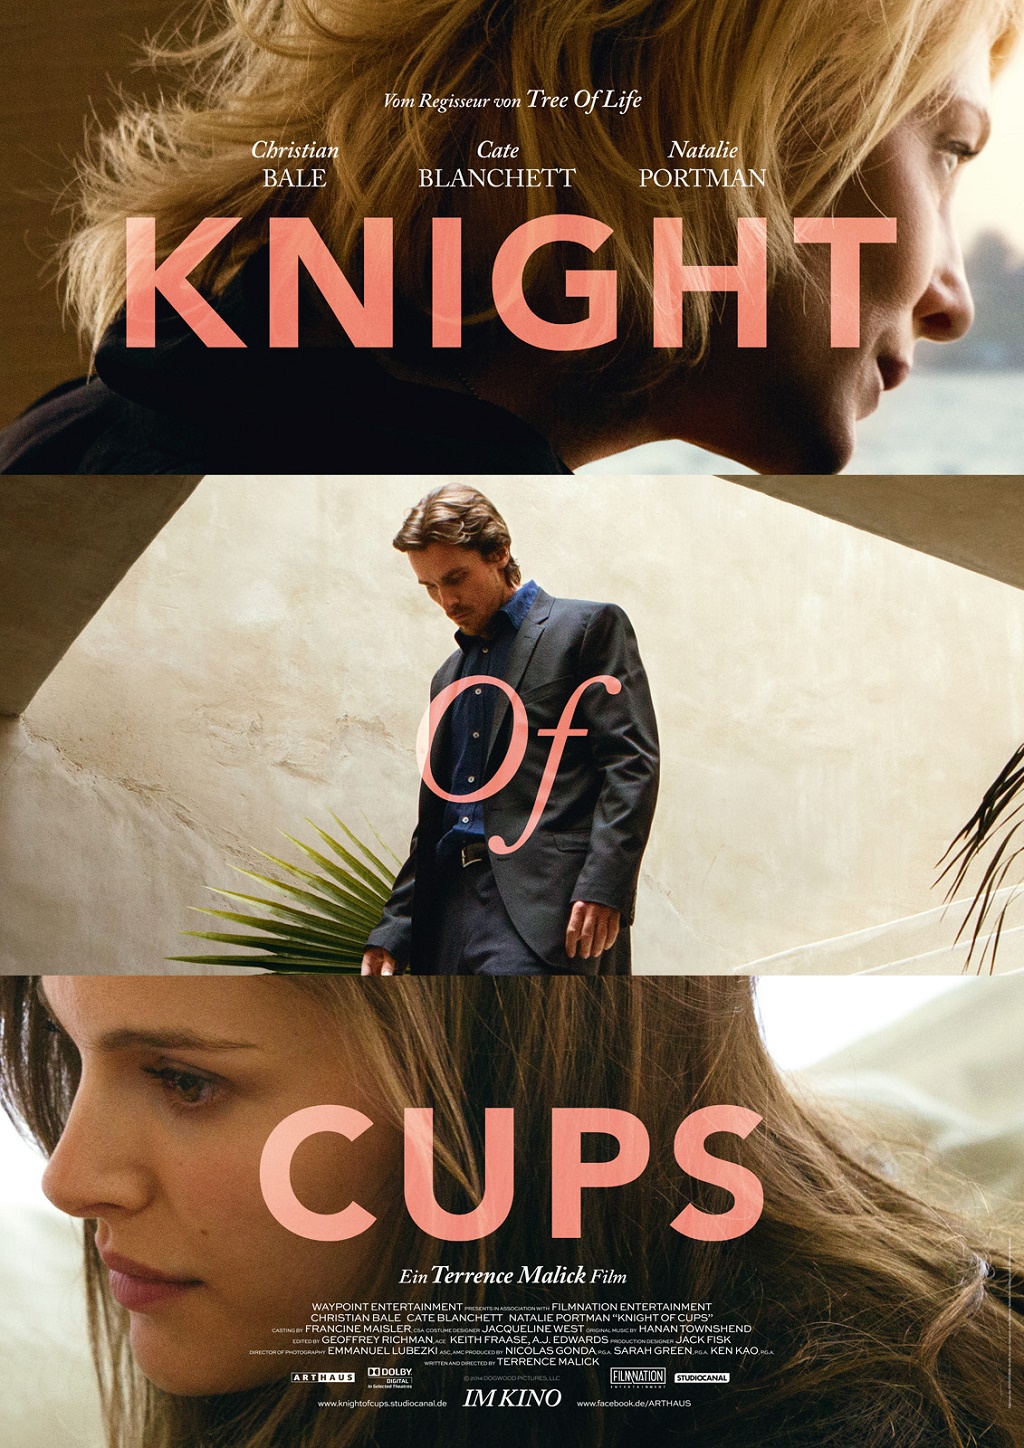 KnightOfCups_Plakat_A3.indd